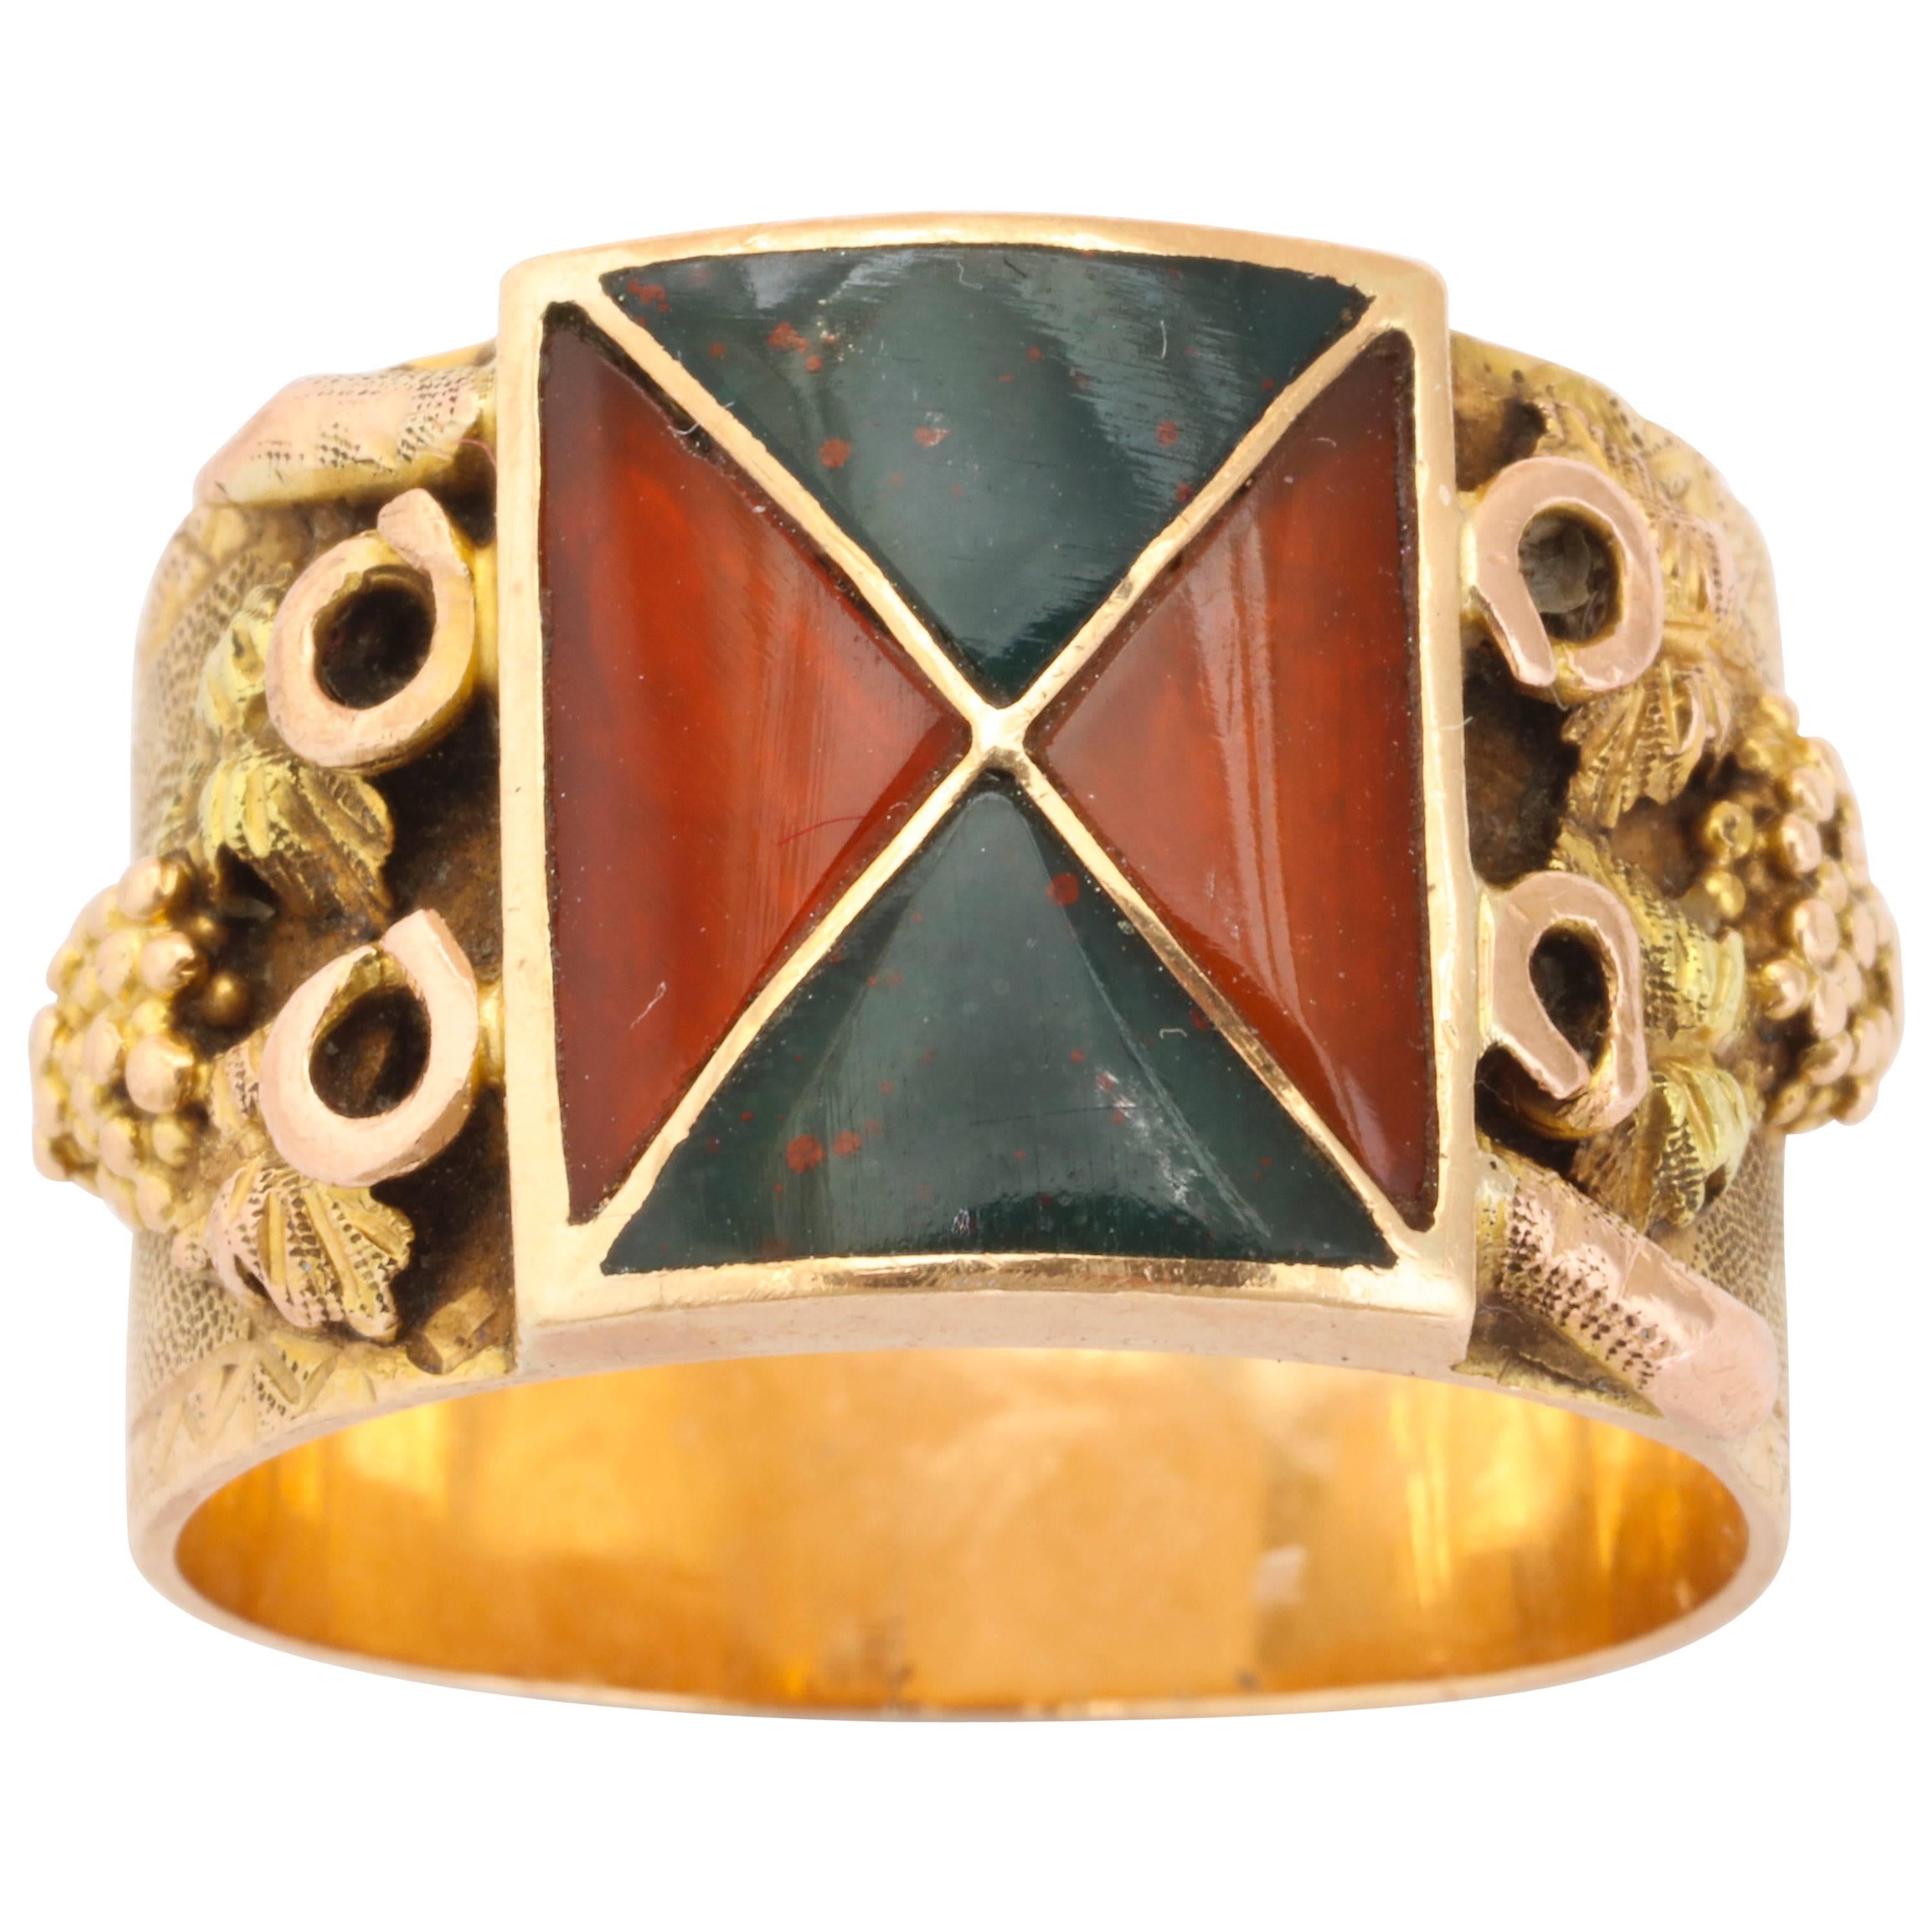 Dazzling Geometric Scottish Agate Ring c. 1860-1880